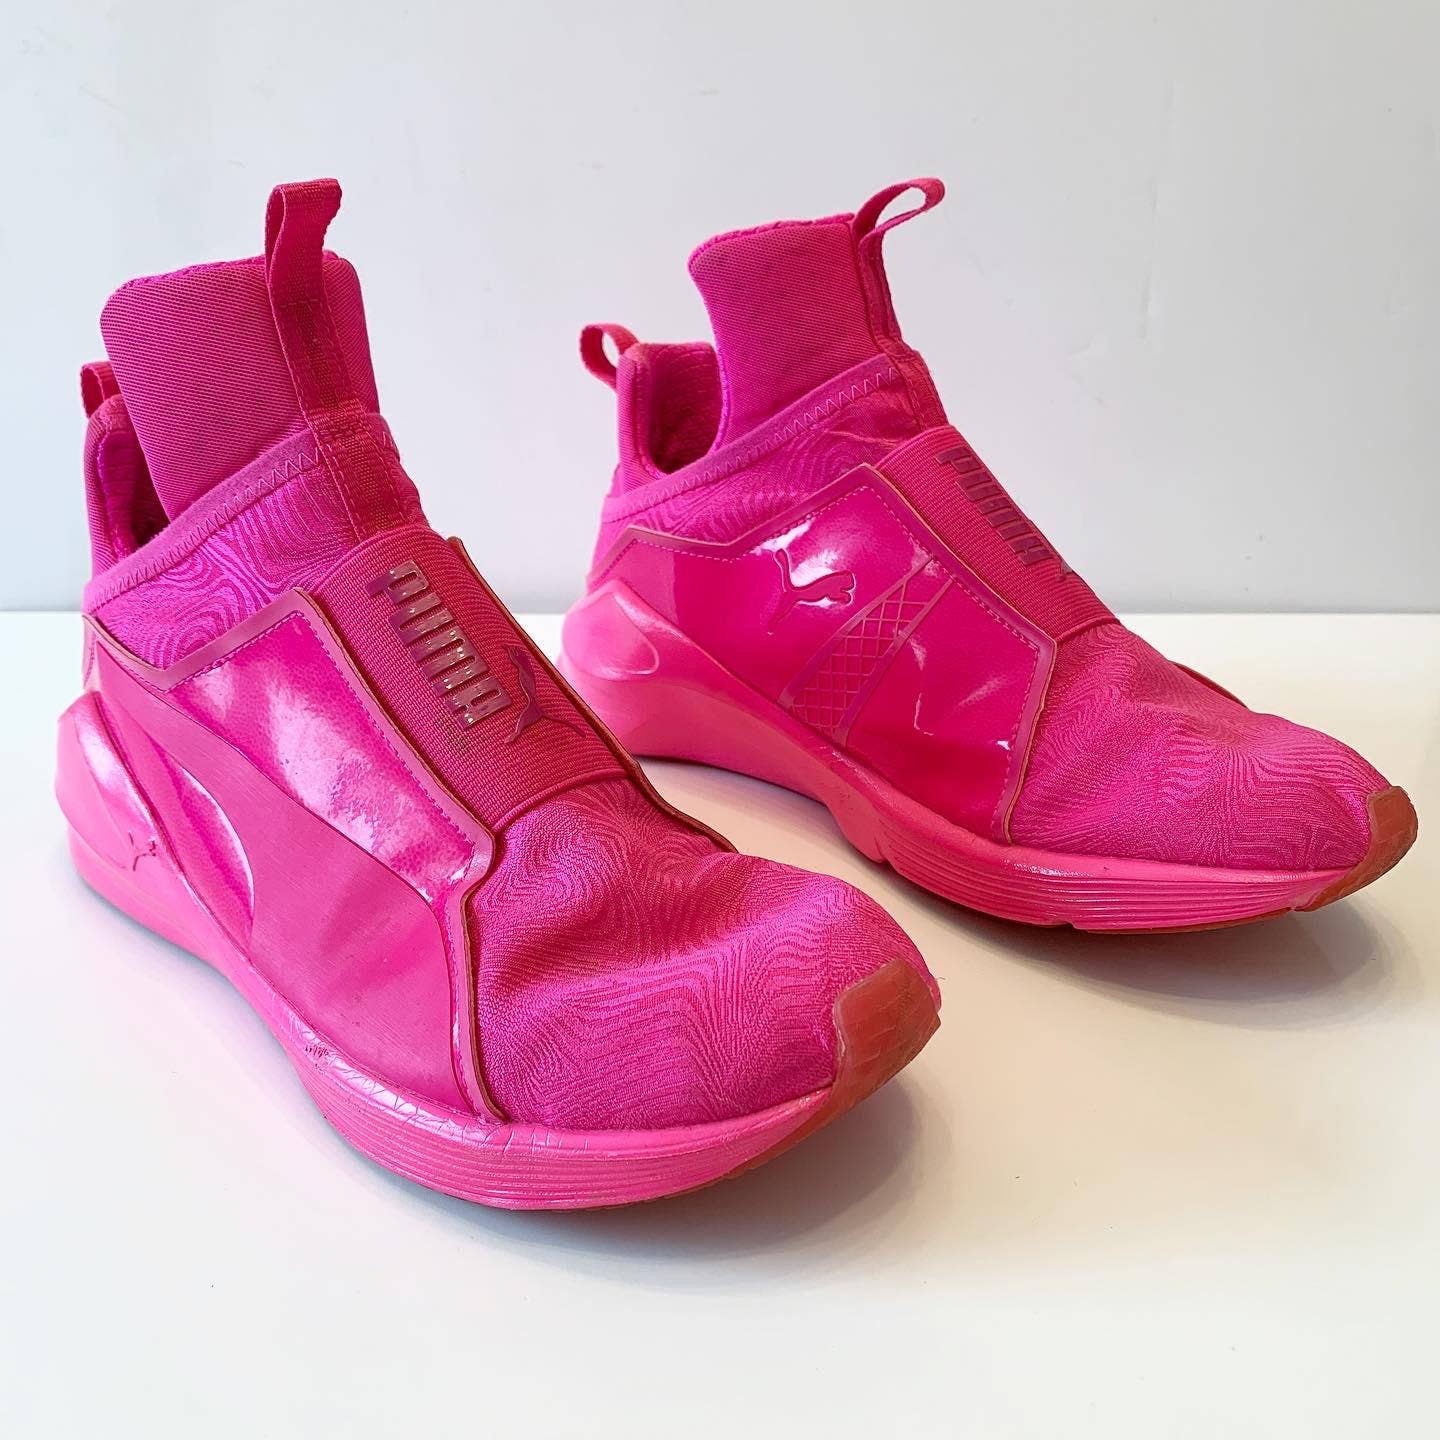 Puma Fierce Bright Pink Fuchsia Neon Sneakers